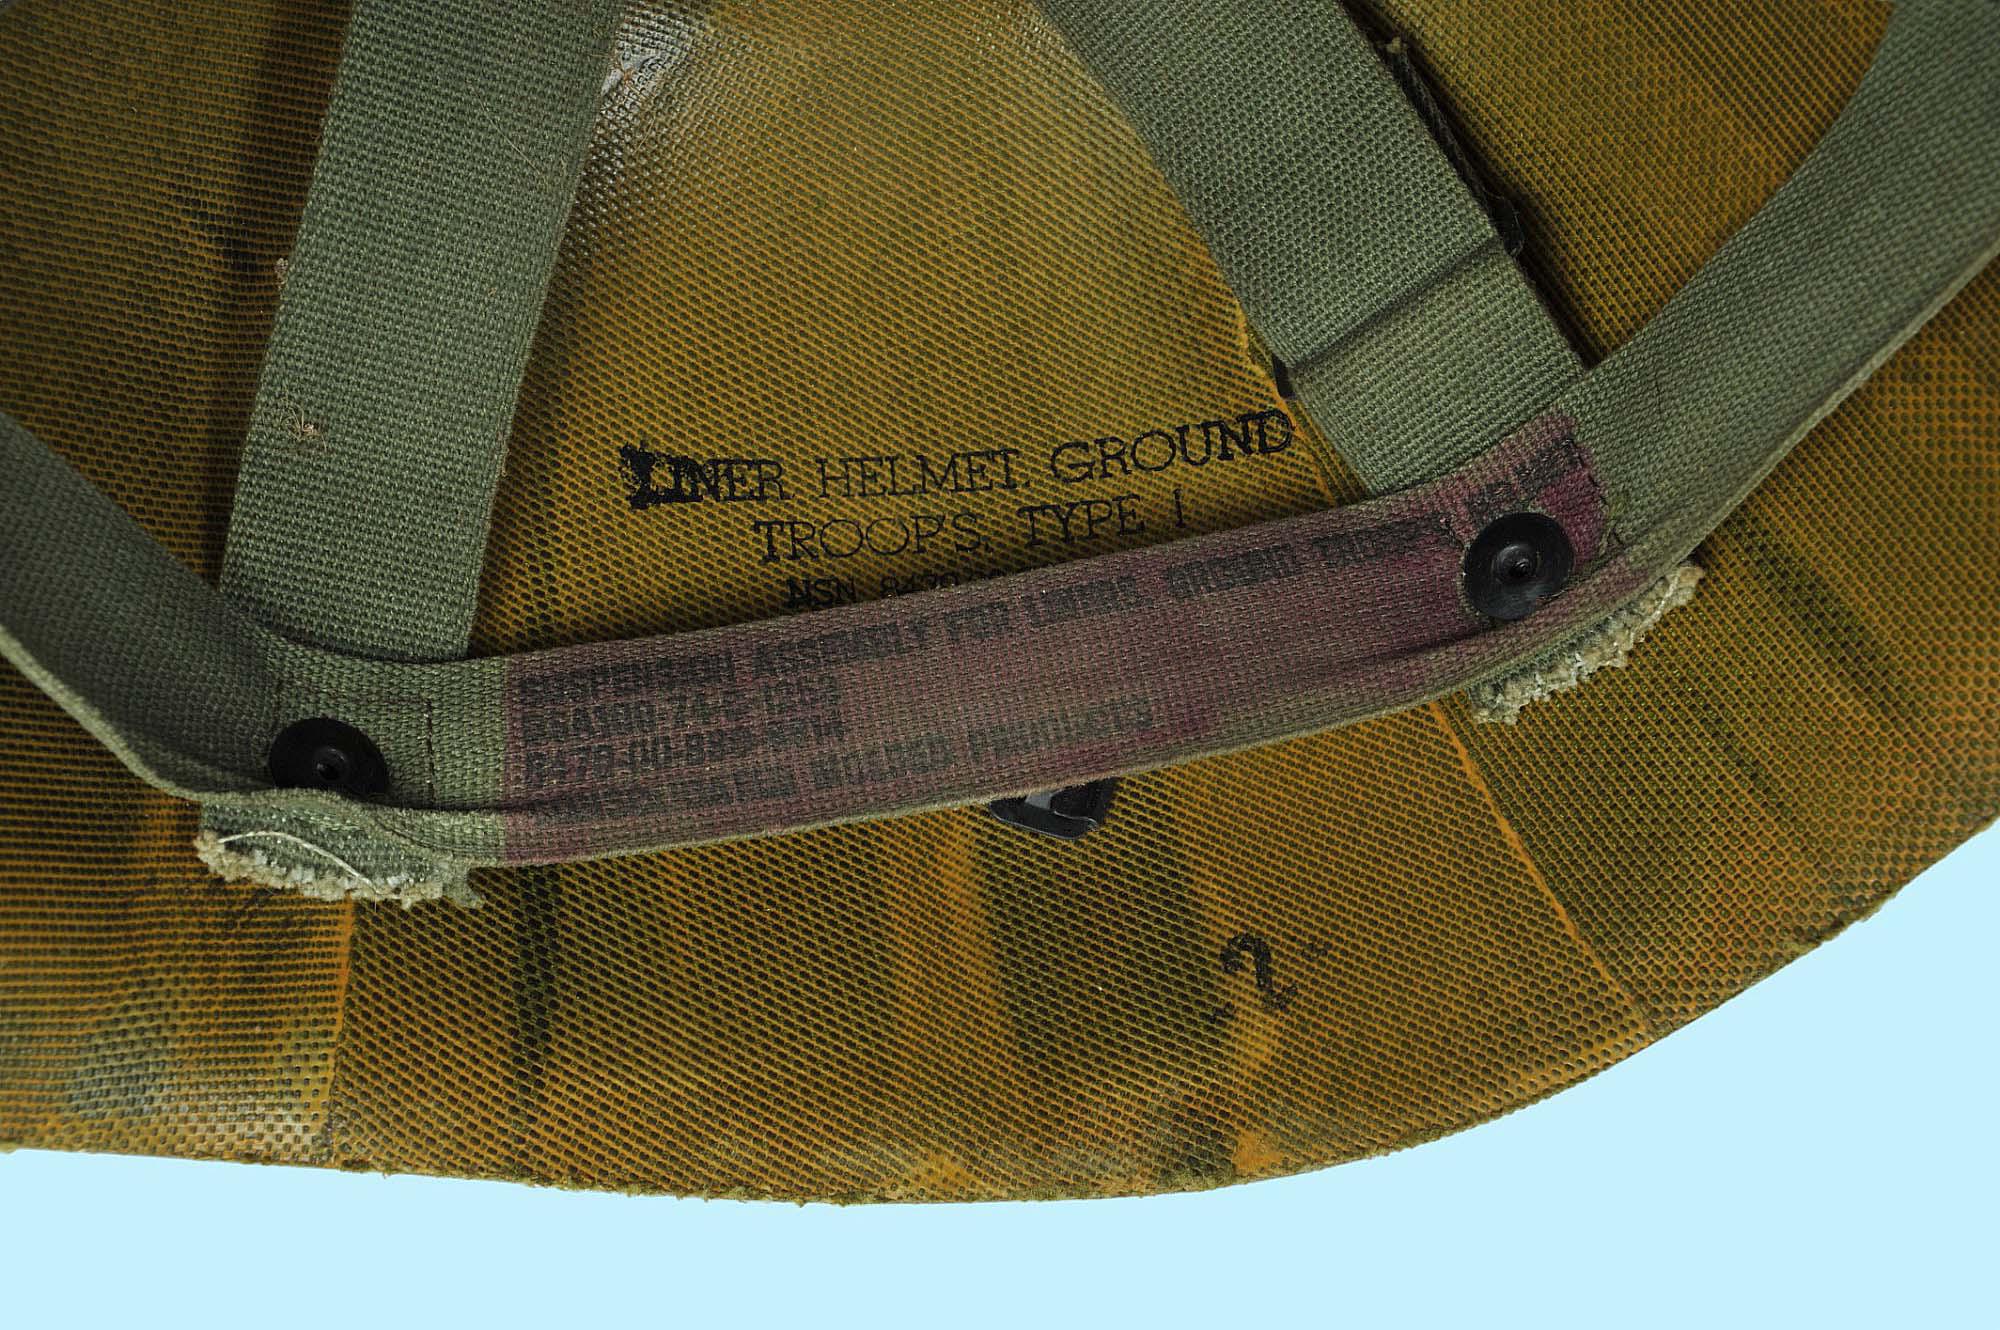 US Military Vietnam War era M1 Helmet & Liner (J)